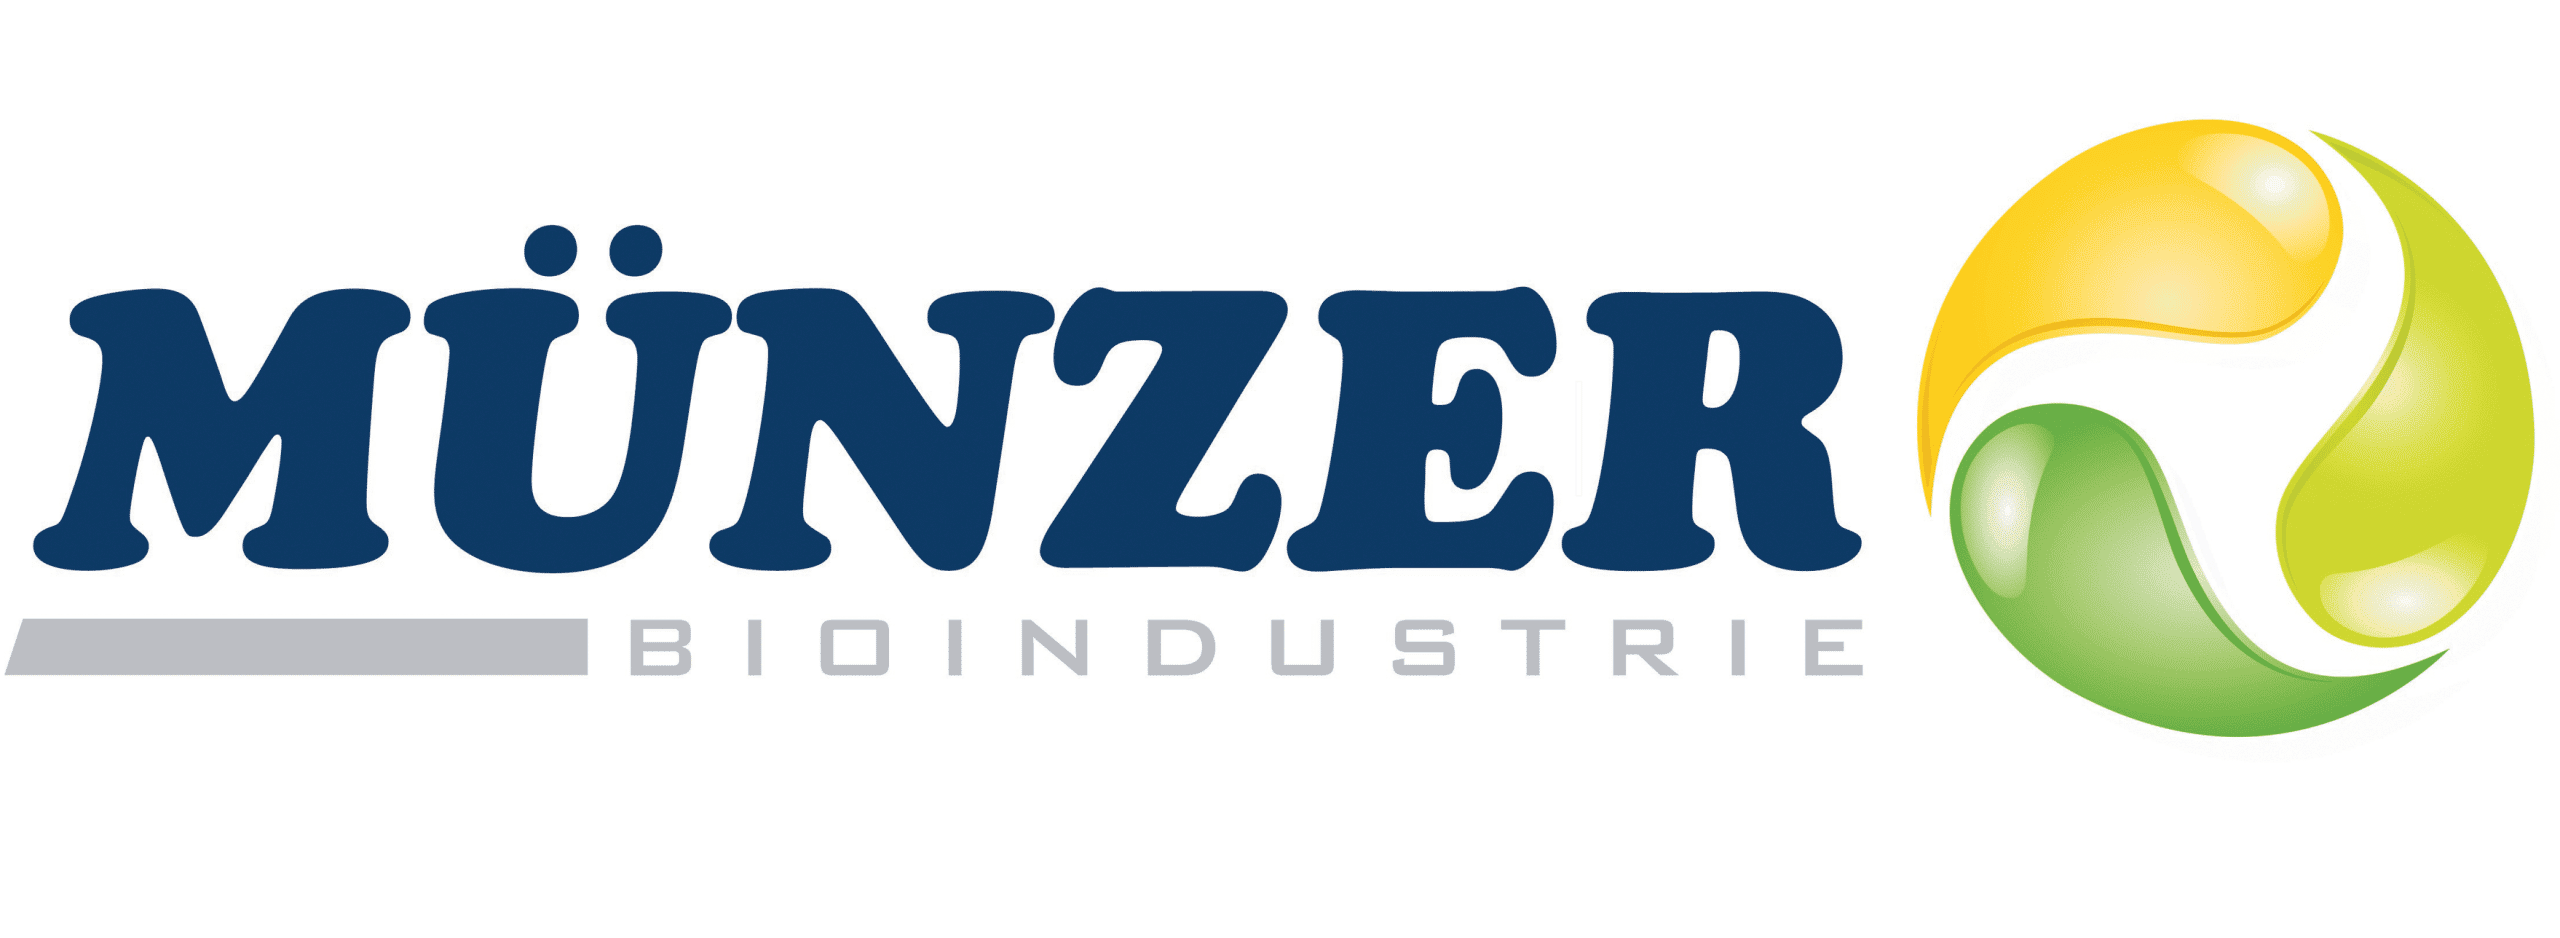 Münzer Bioindustrie Logo - Sponsor Rechbergrennen